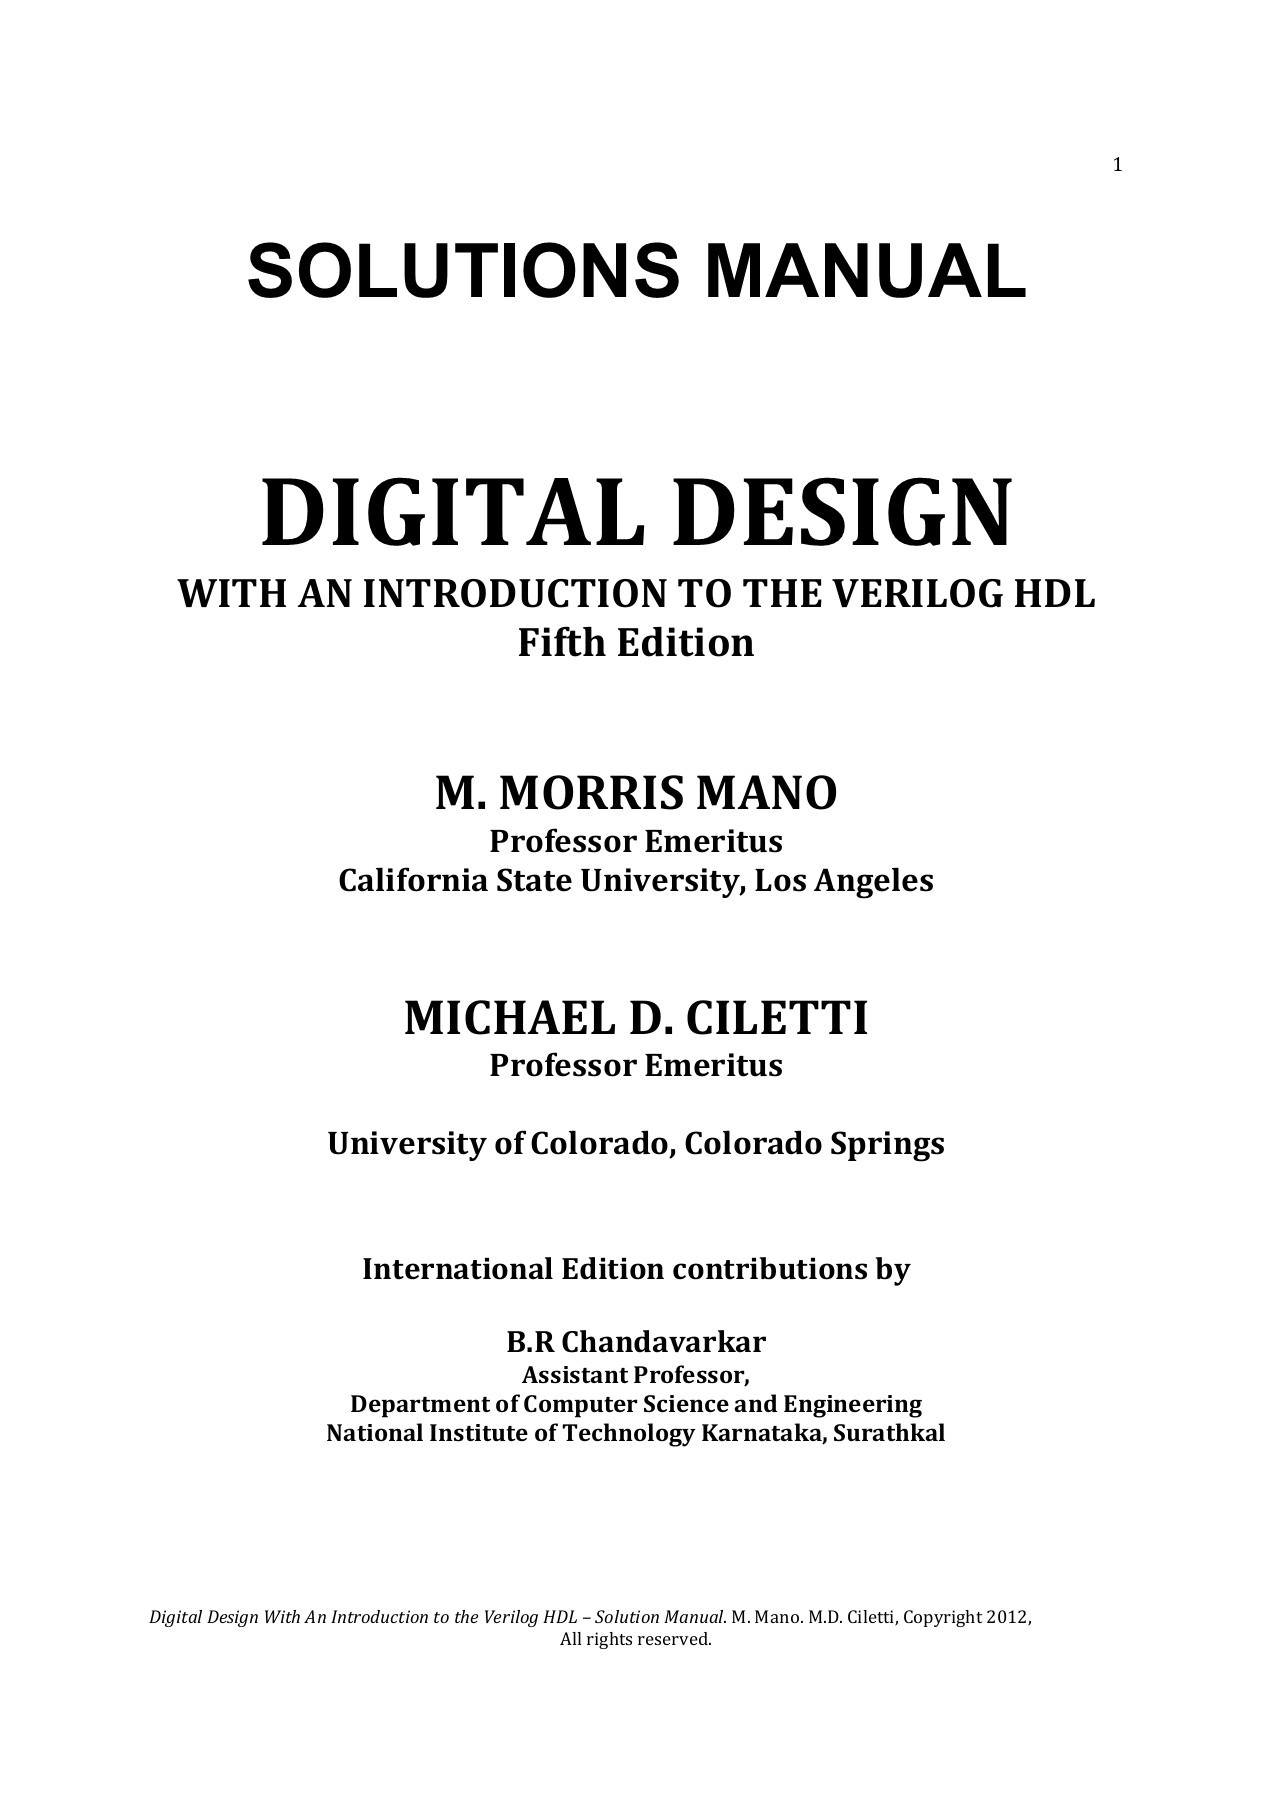 Digital design fifth edition solution manual pdf